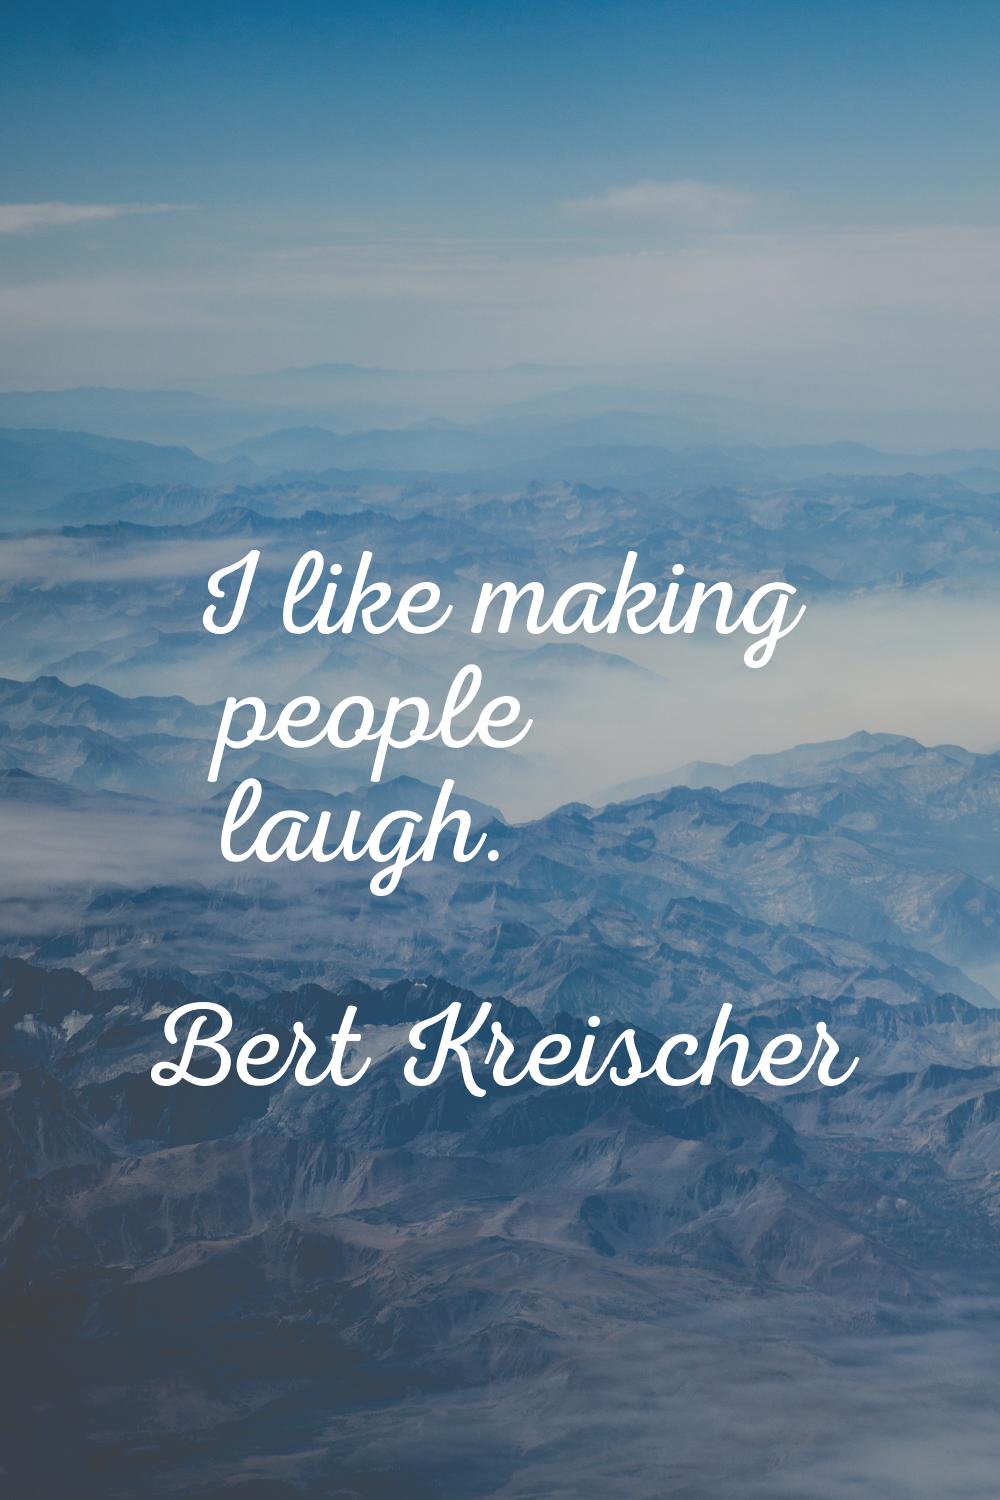 I like making people laugh.